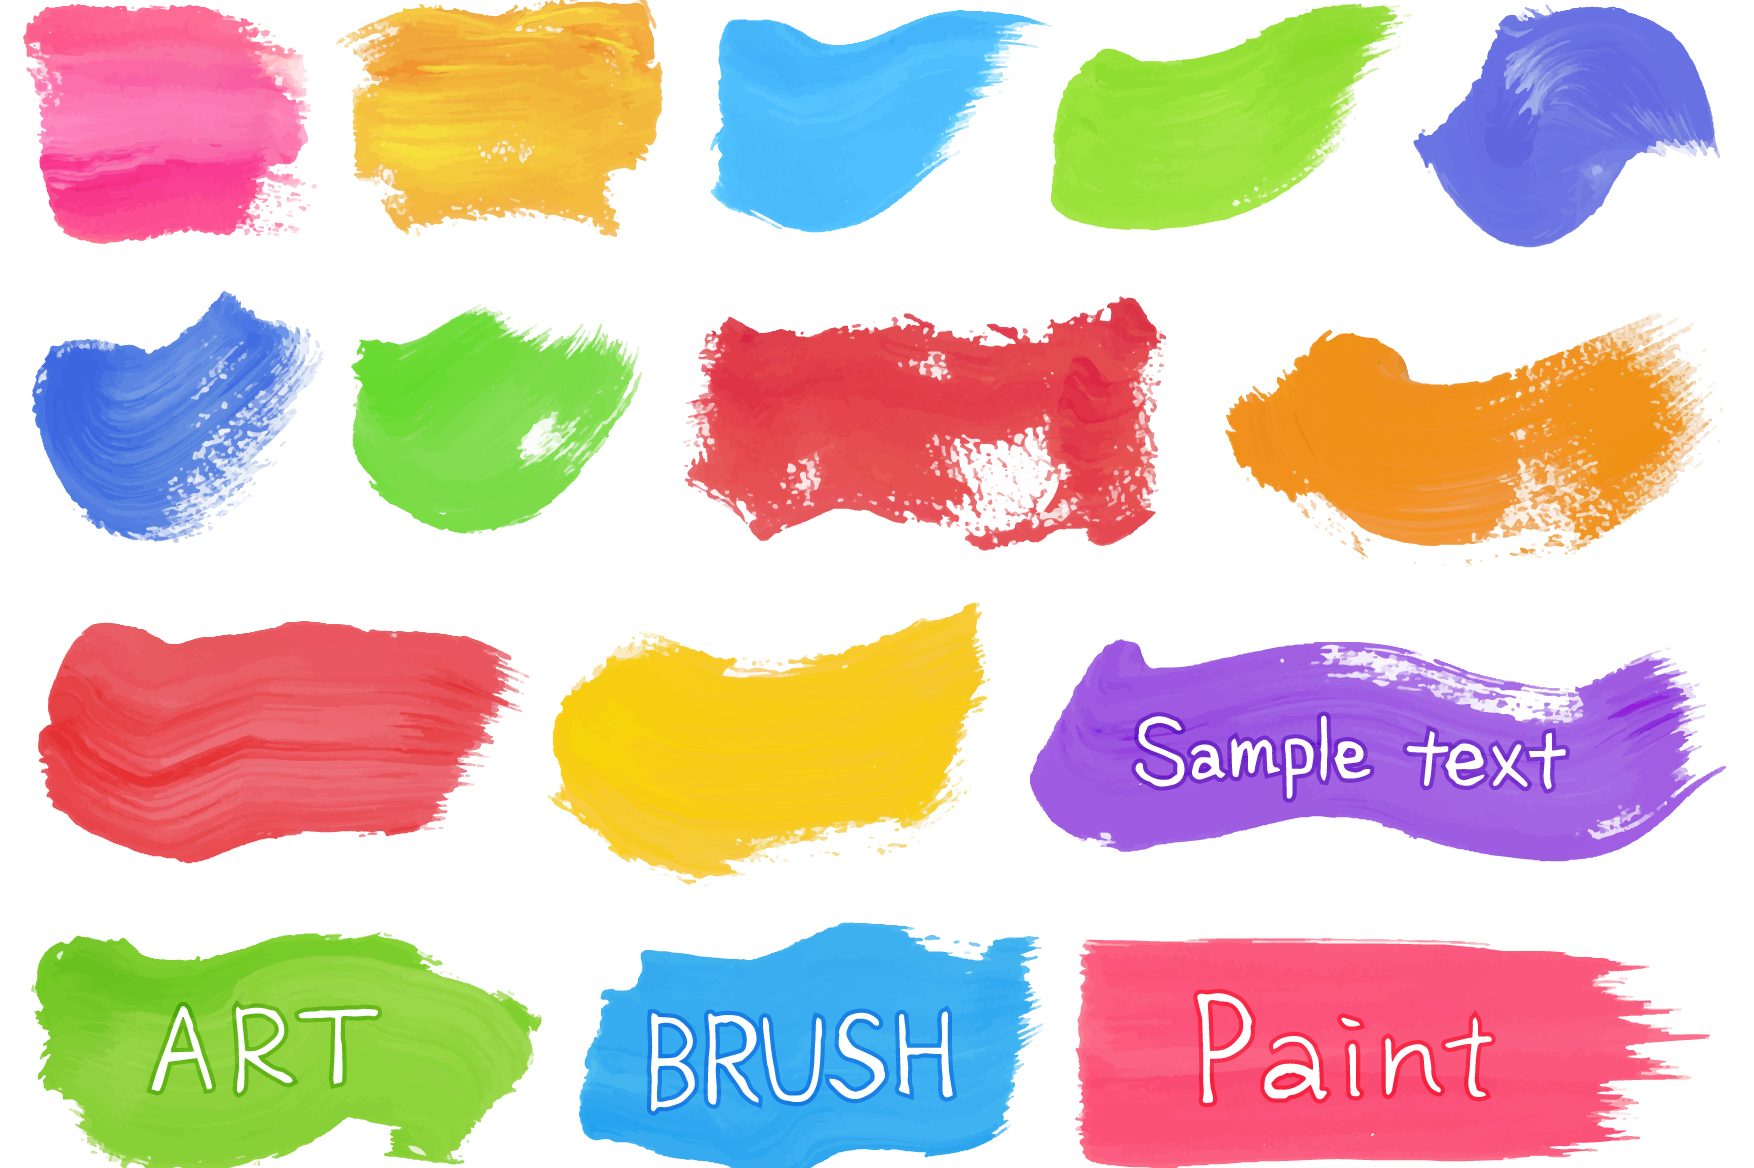 free art paint brushes illustAC edited